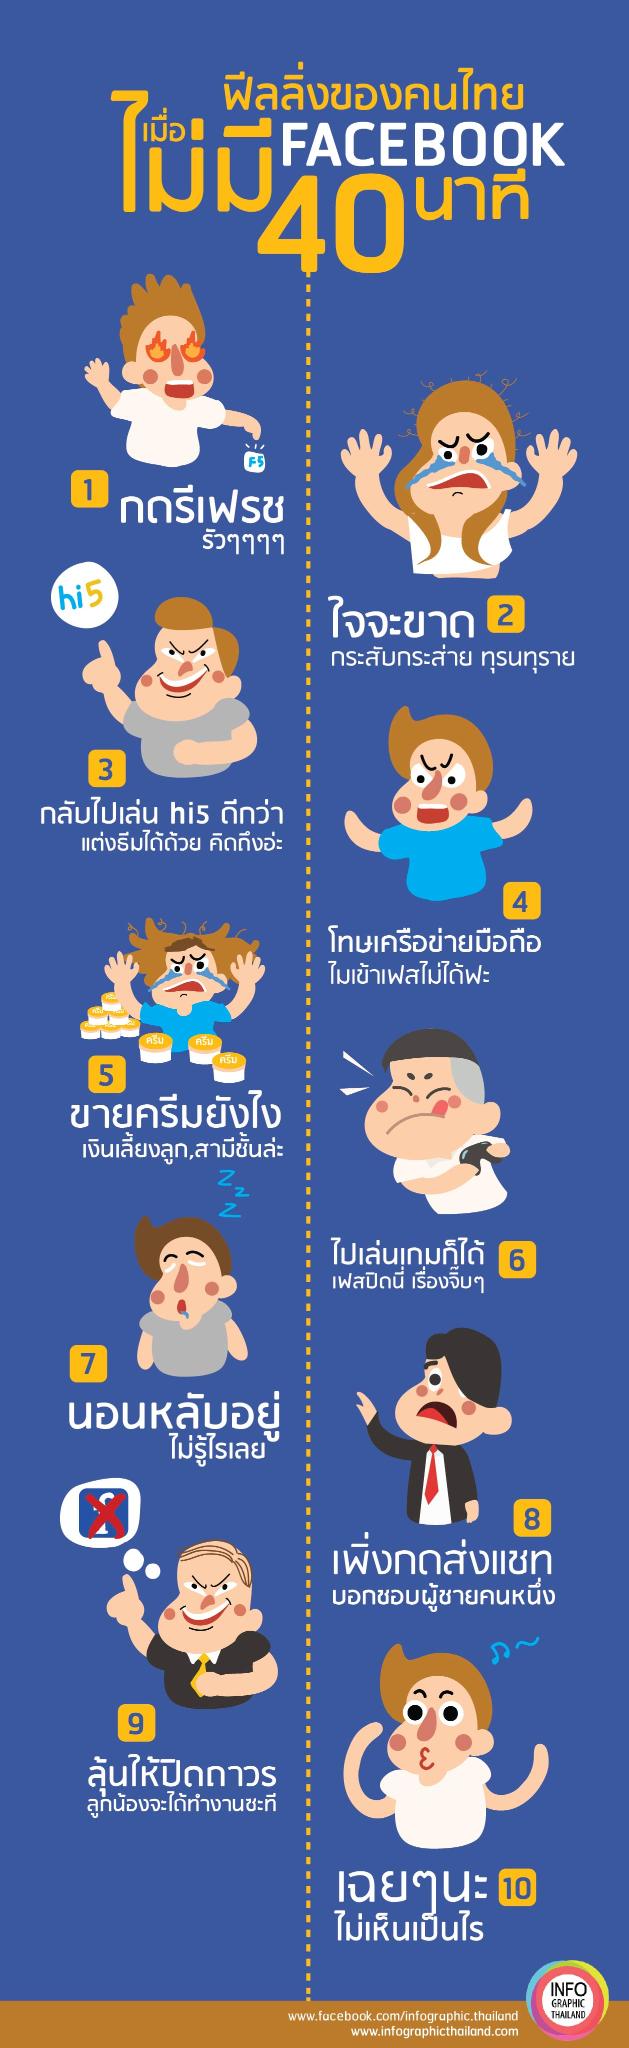 10 thai people feeling when facebok down